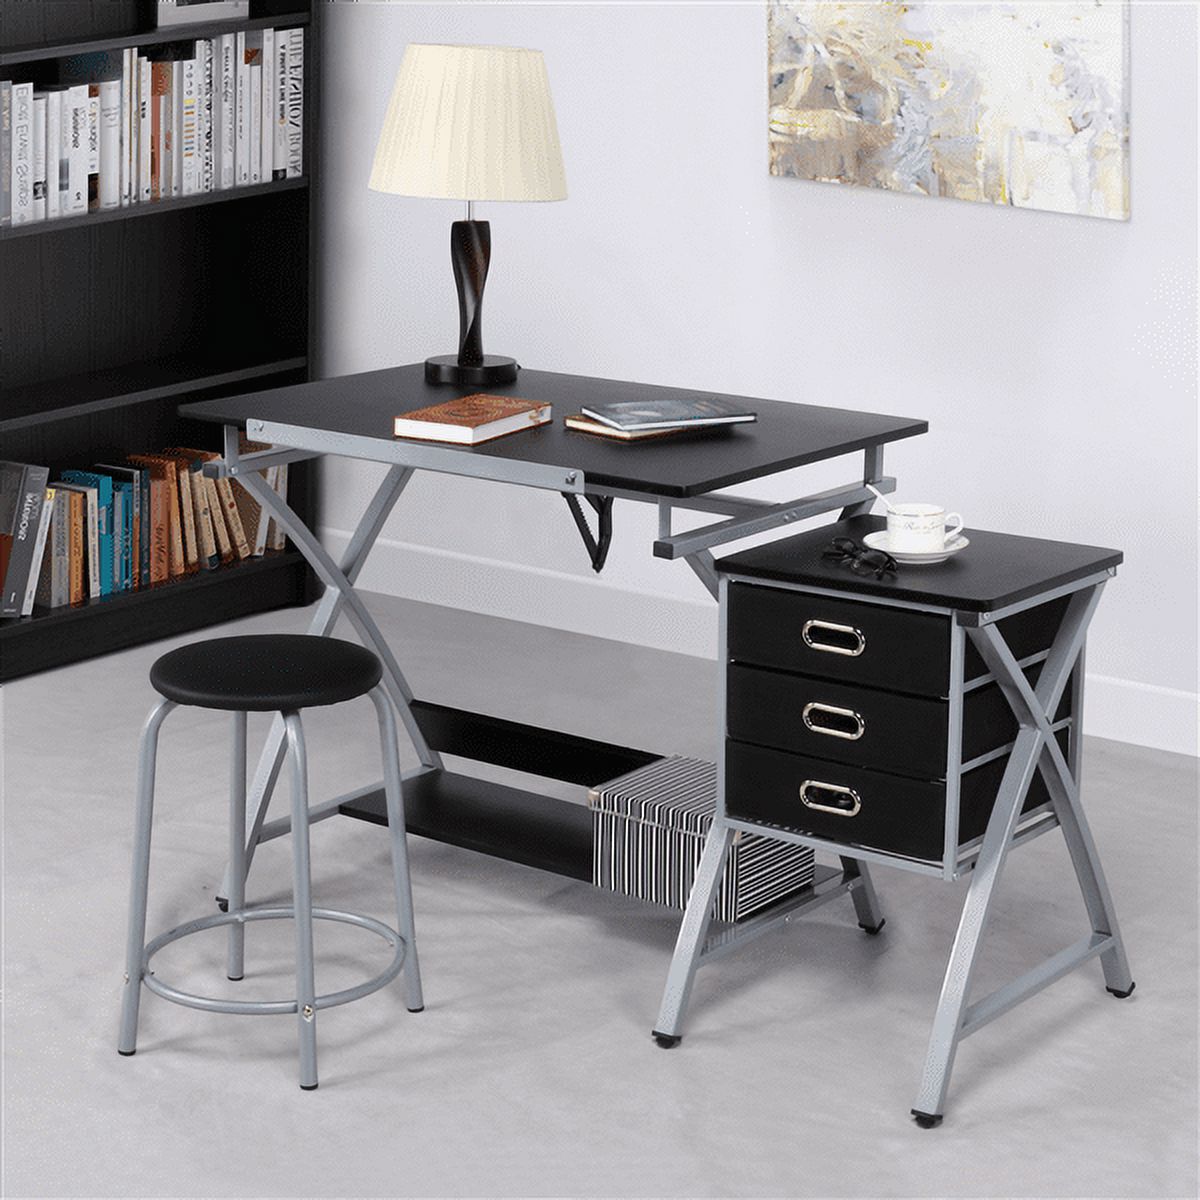 Alden Design Adjustable Steel Drafting Table with Stool, Black - image 5 of 13